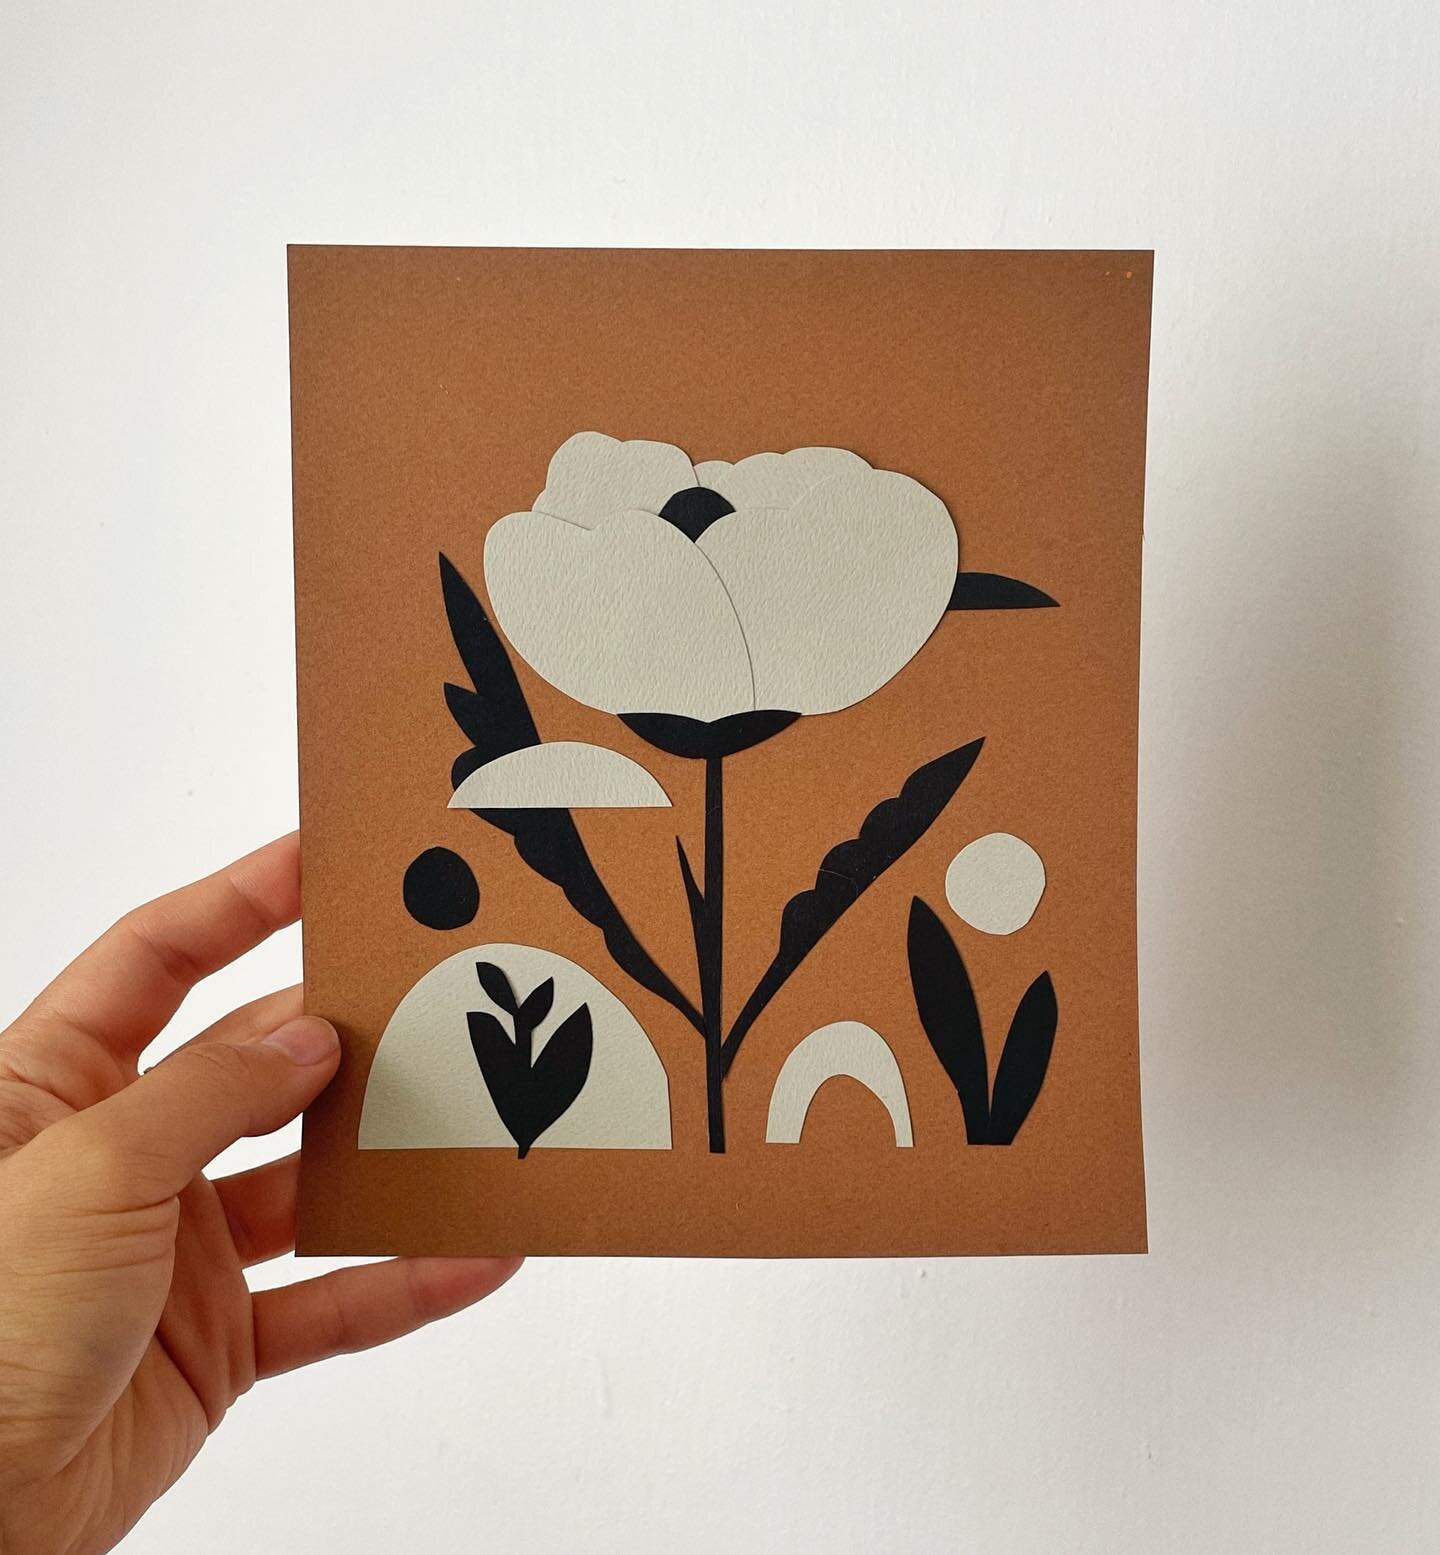 ✂️✂️✂️ happy September, friends ✨🧡🌞 less screens, more glue. 

#cutpaperart #collage #illustration #paperillustration